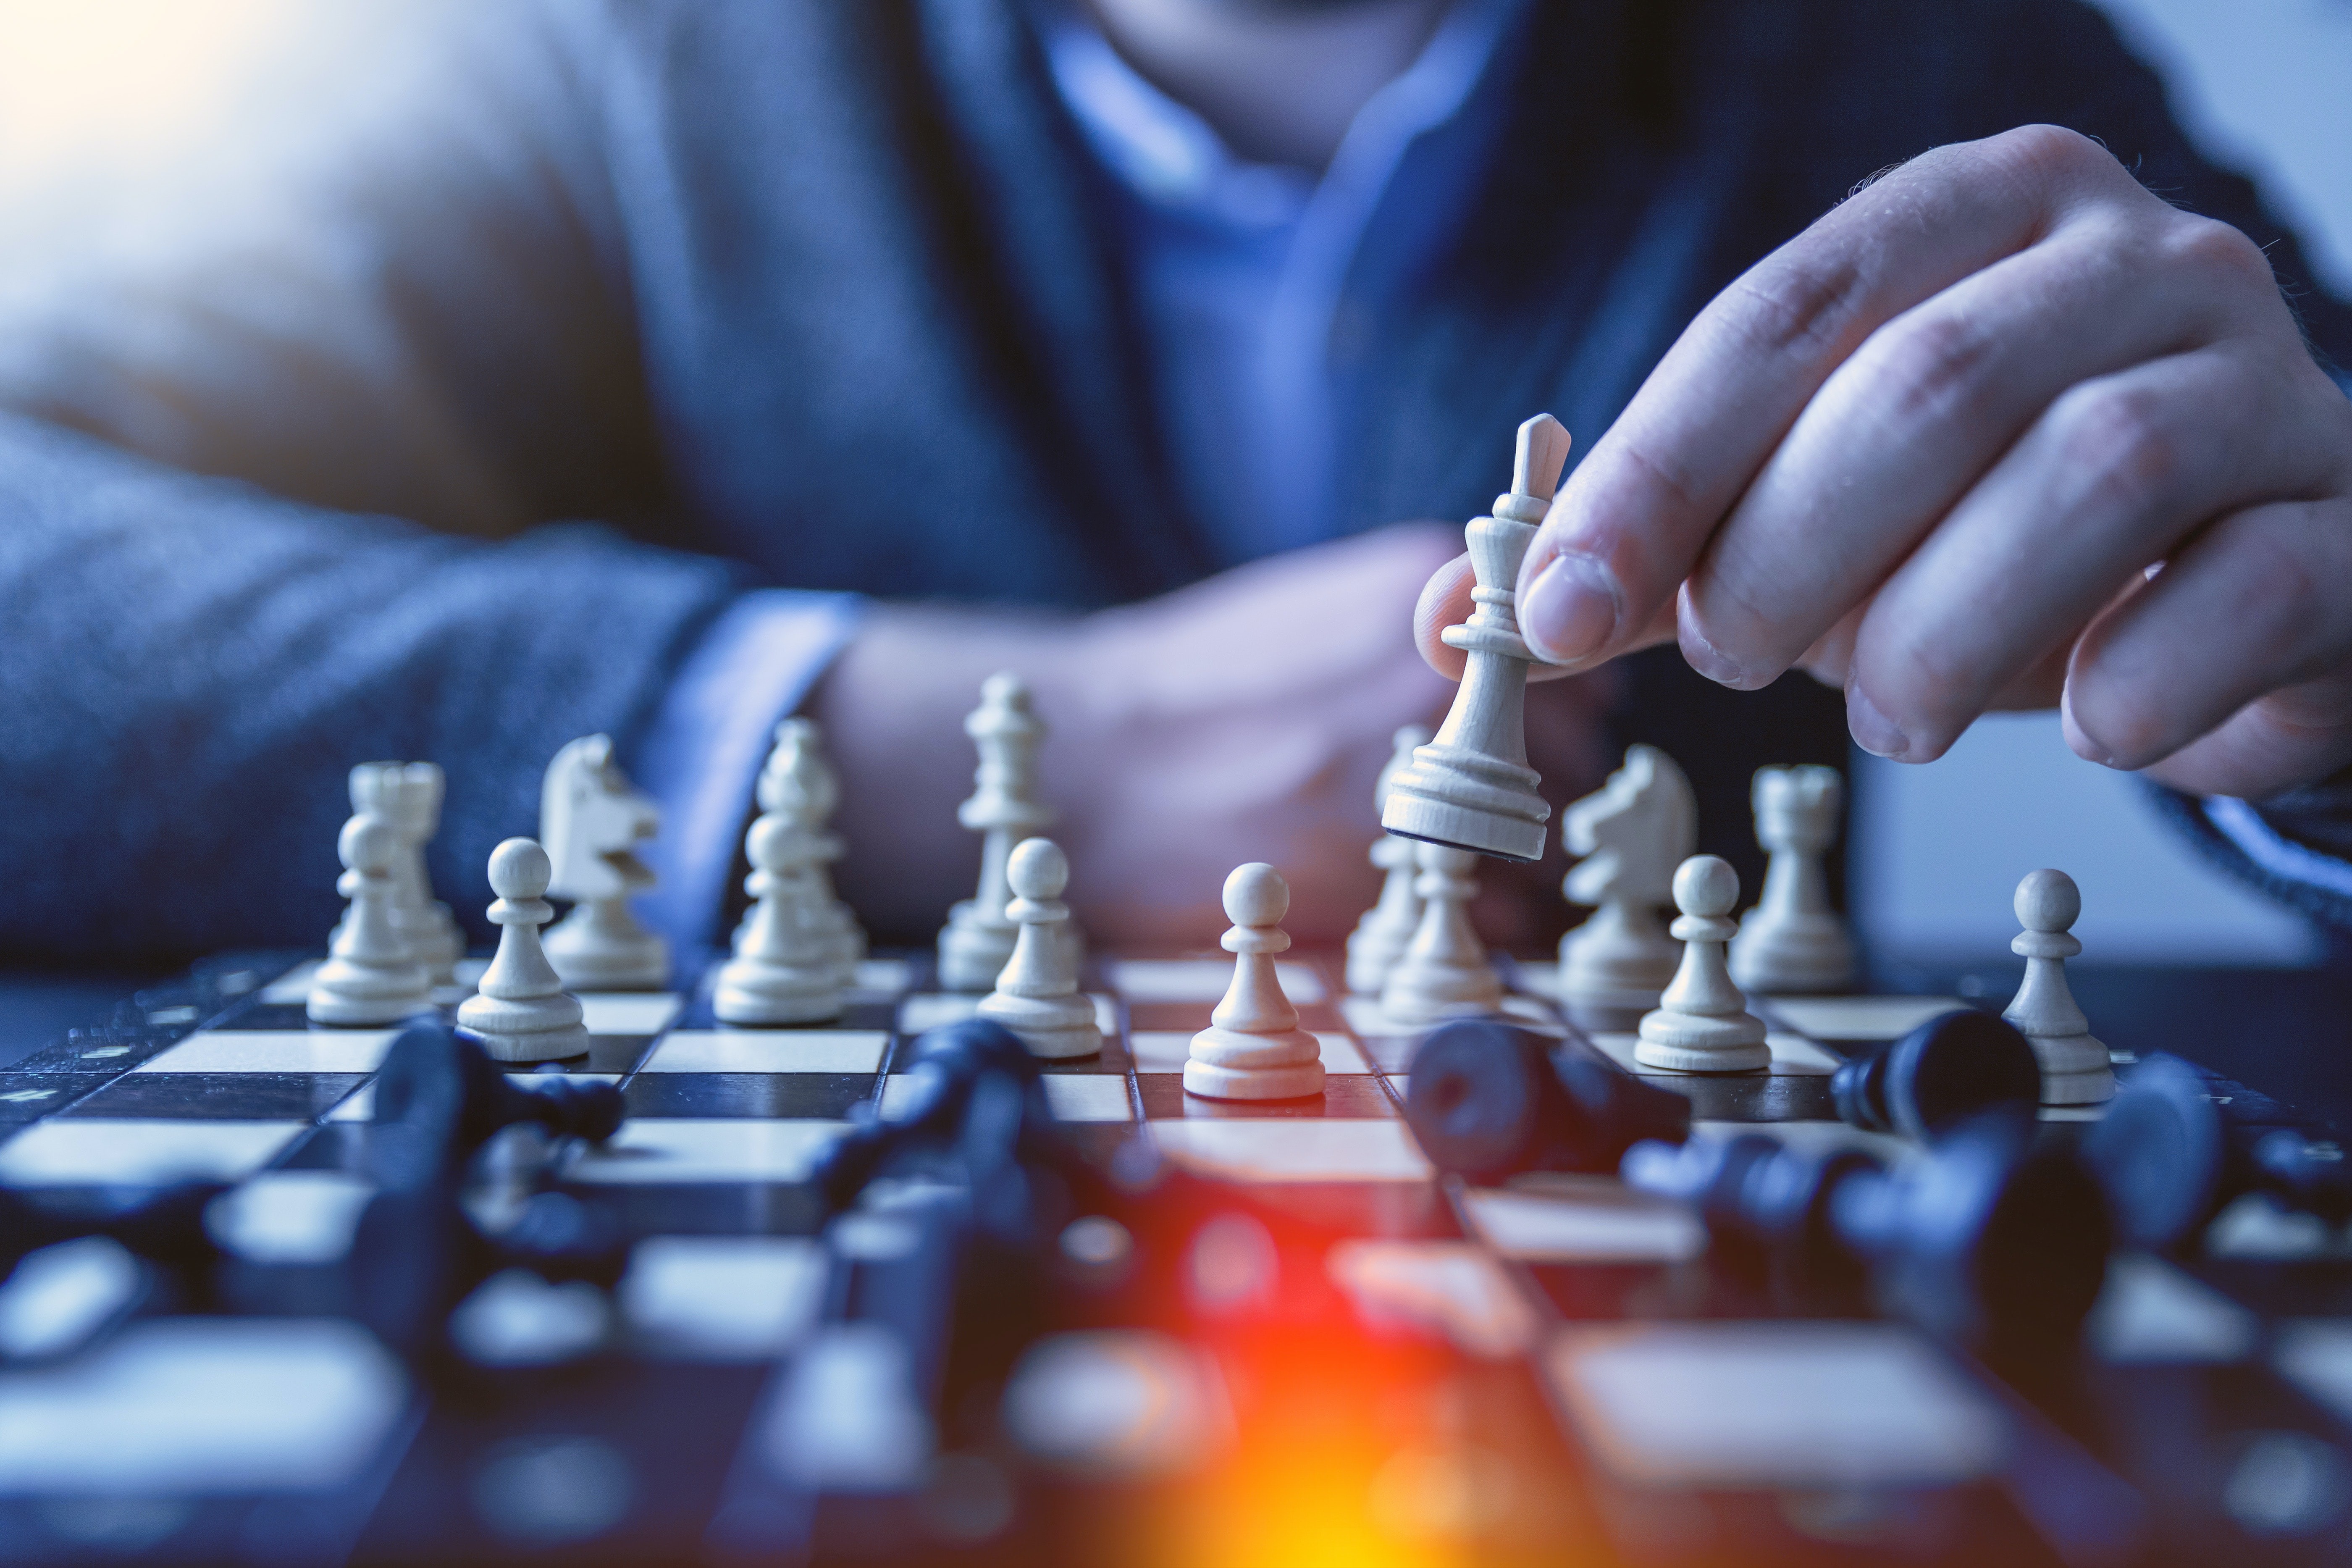 Além do xadrez: conheça 5 jogos de tabuleiros populares na Idade